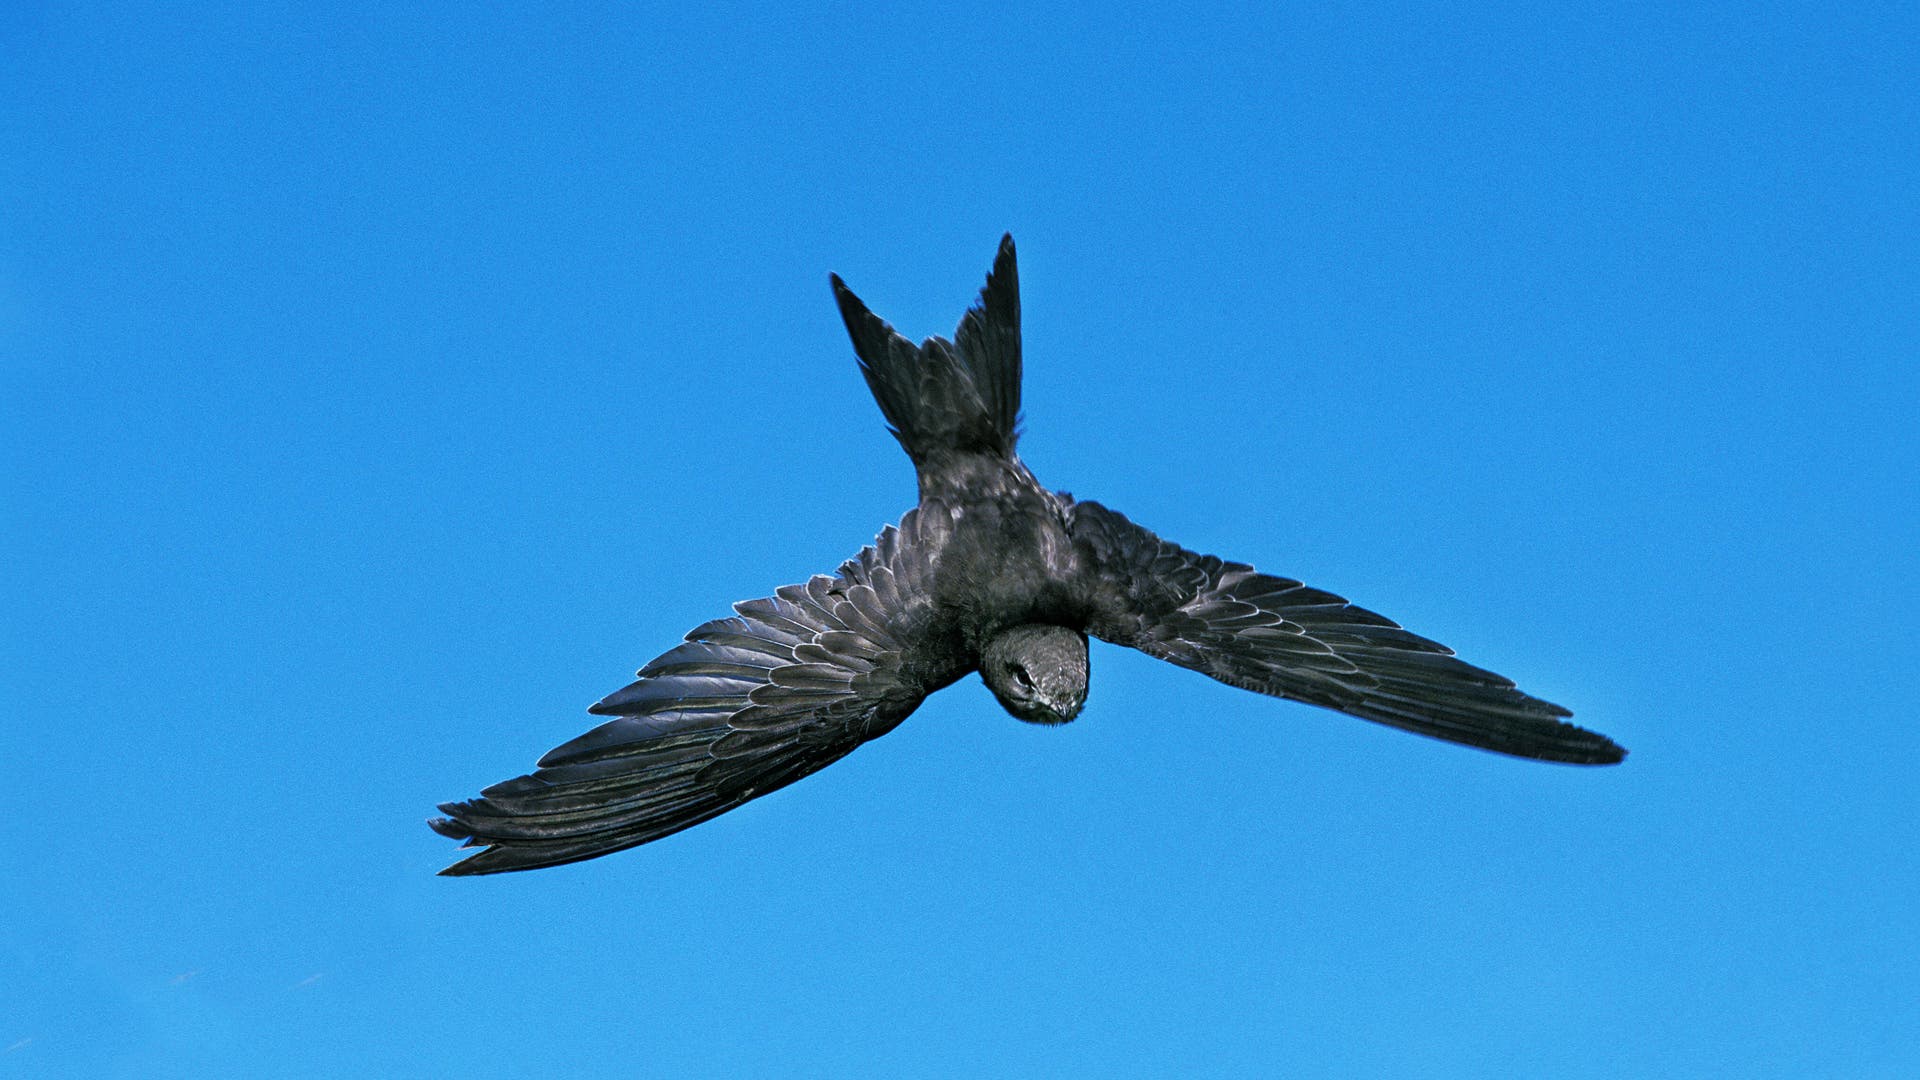 Ornithology: Swift falls into solidity